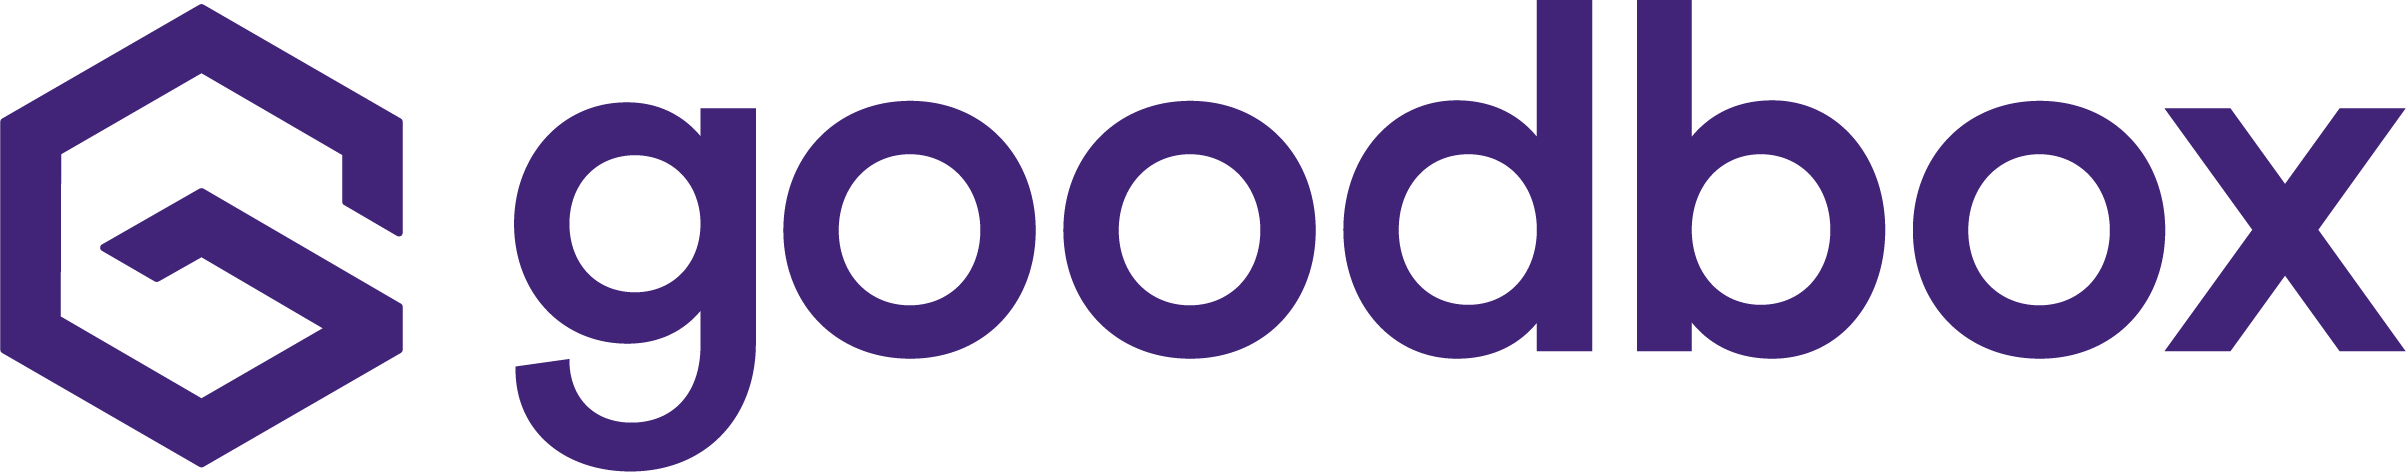 Goodbox logo